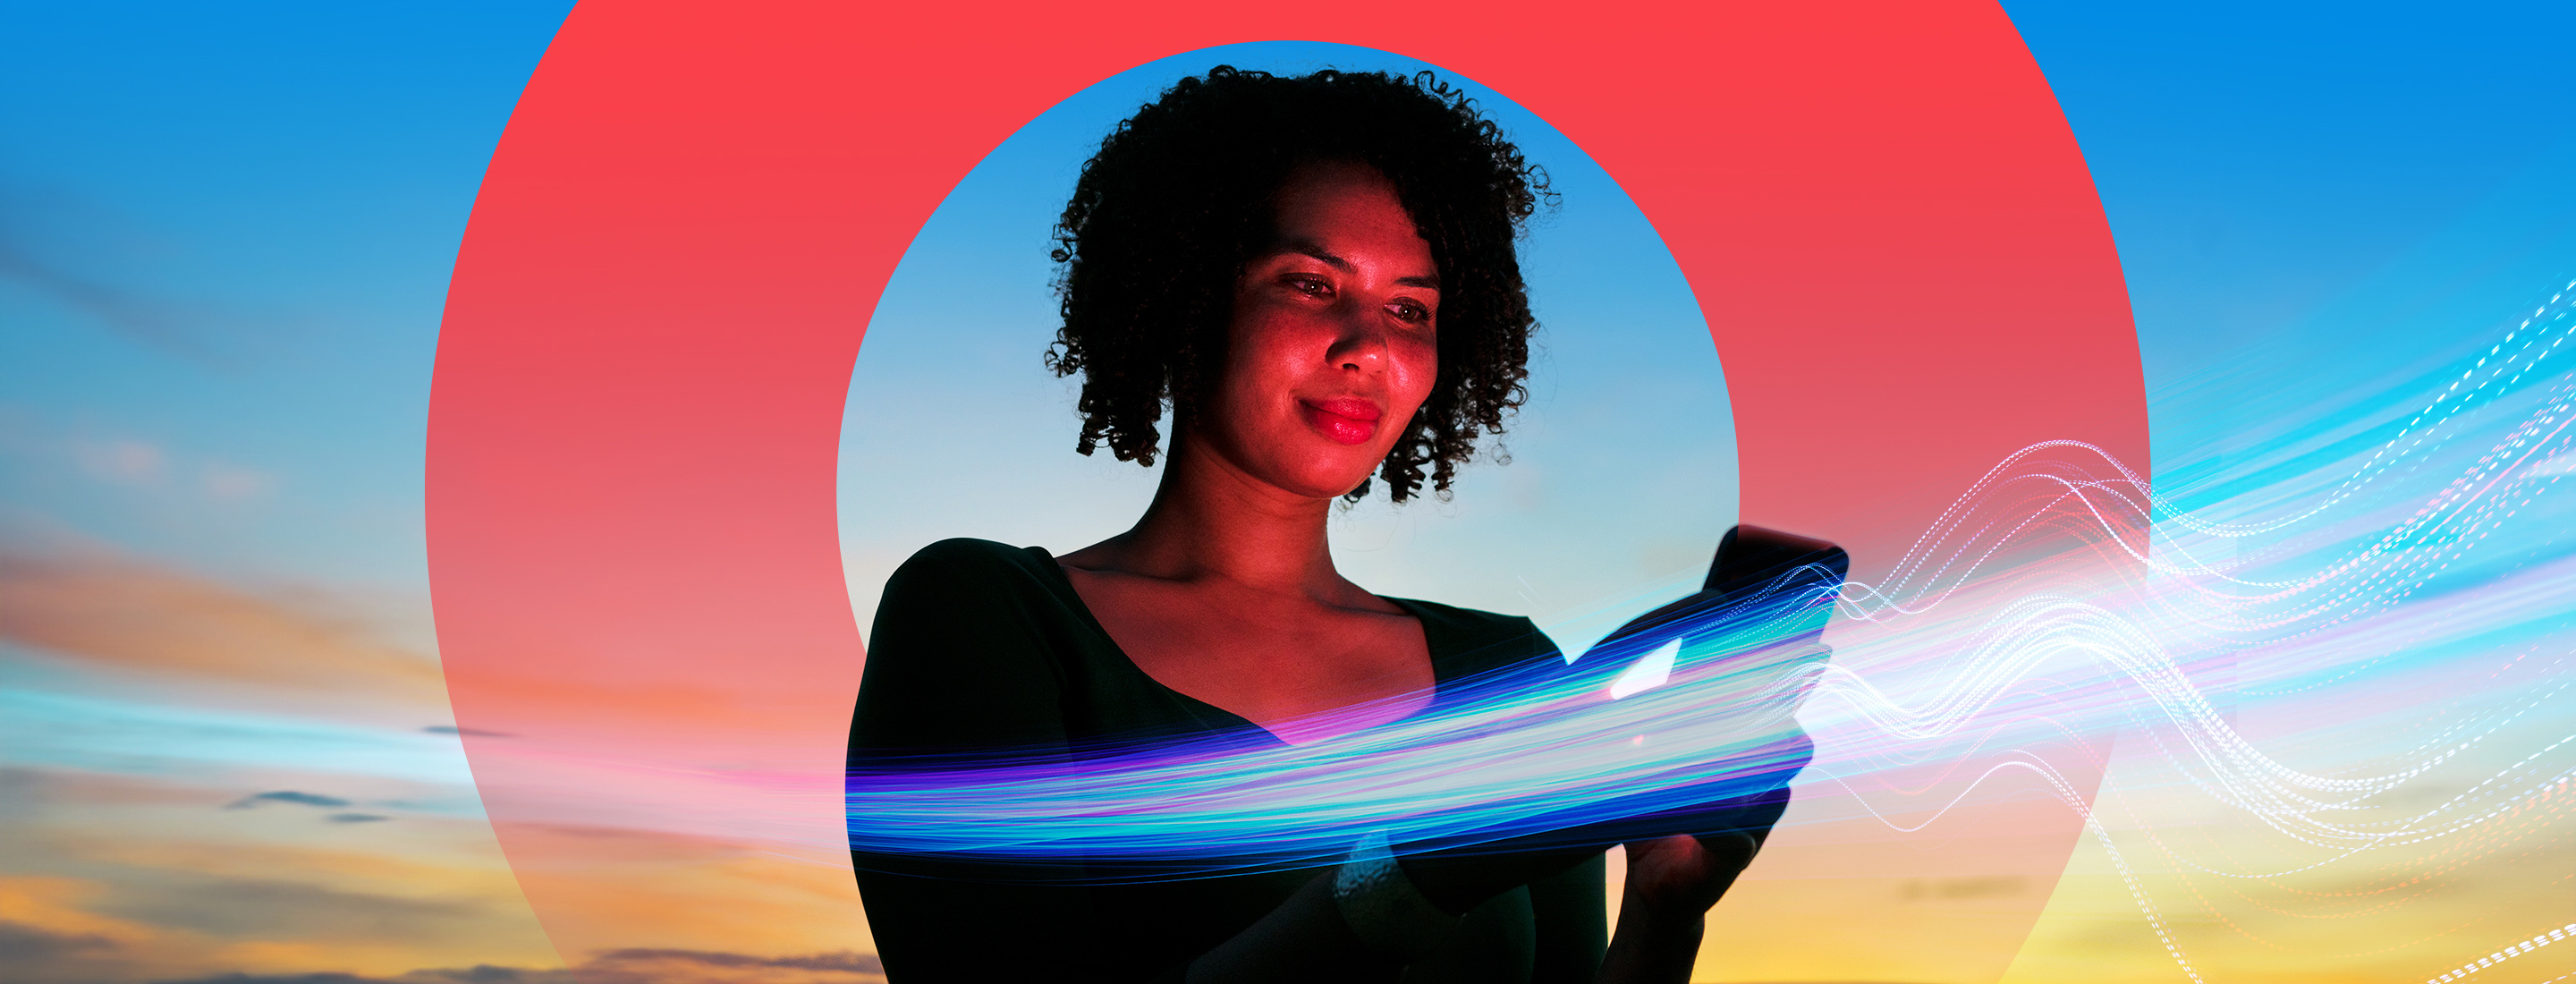 Woman using smartphone with light streak representing data